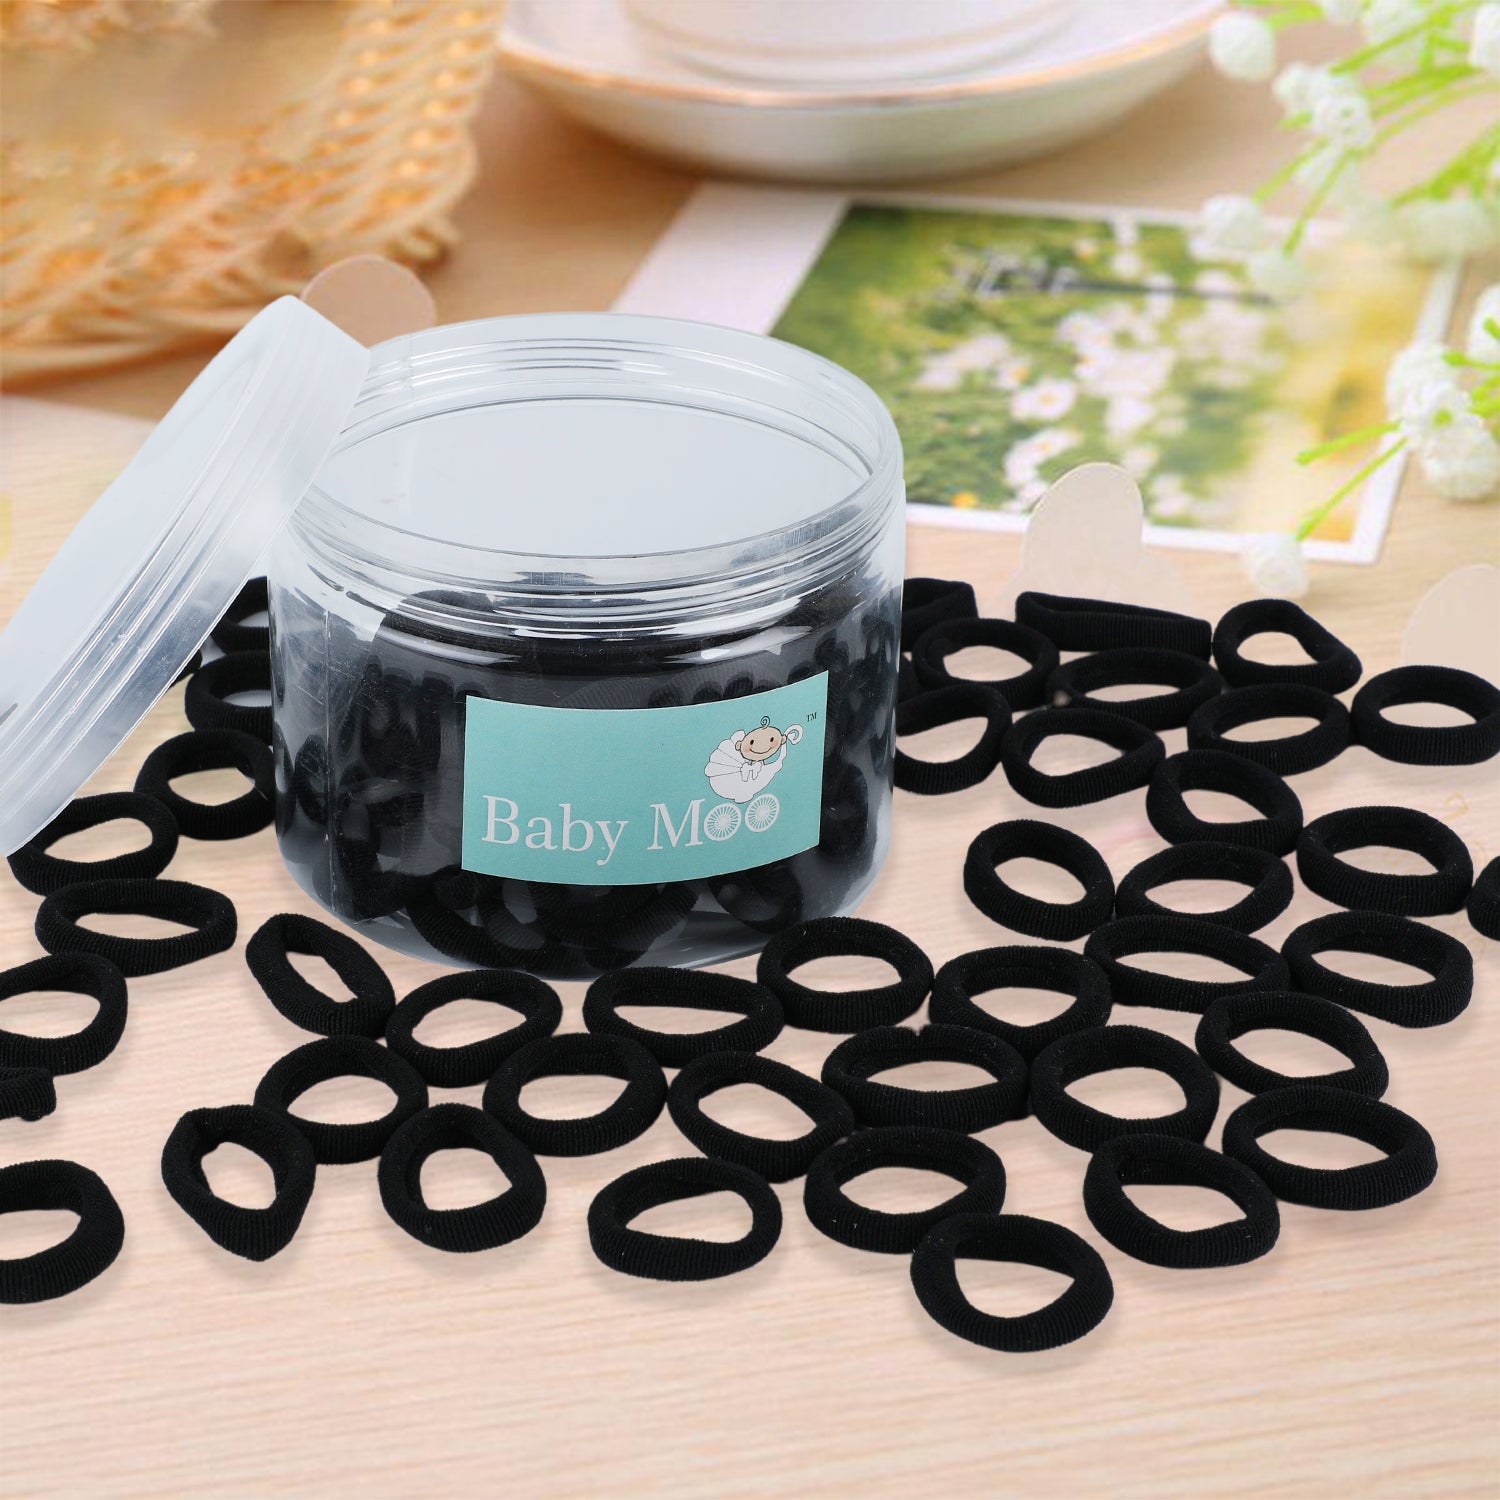 Mini Rubber Bands Soft Stretch Hair Elastic 100 Pcs - Black - Baby Moo